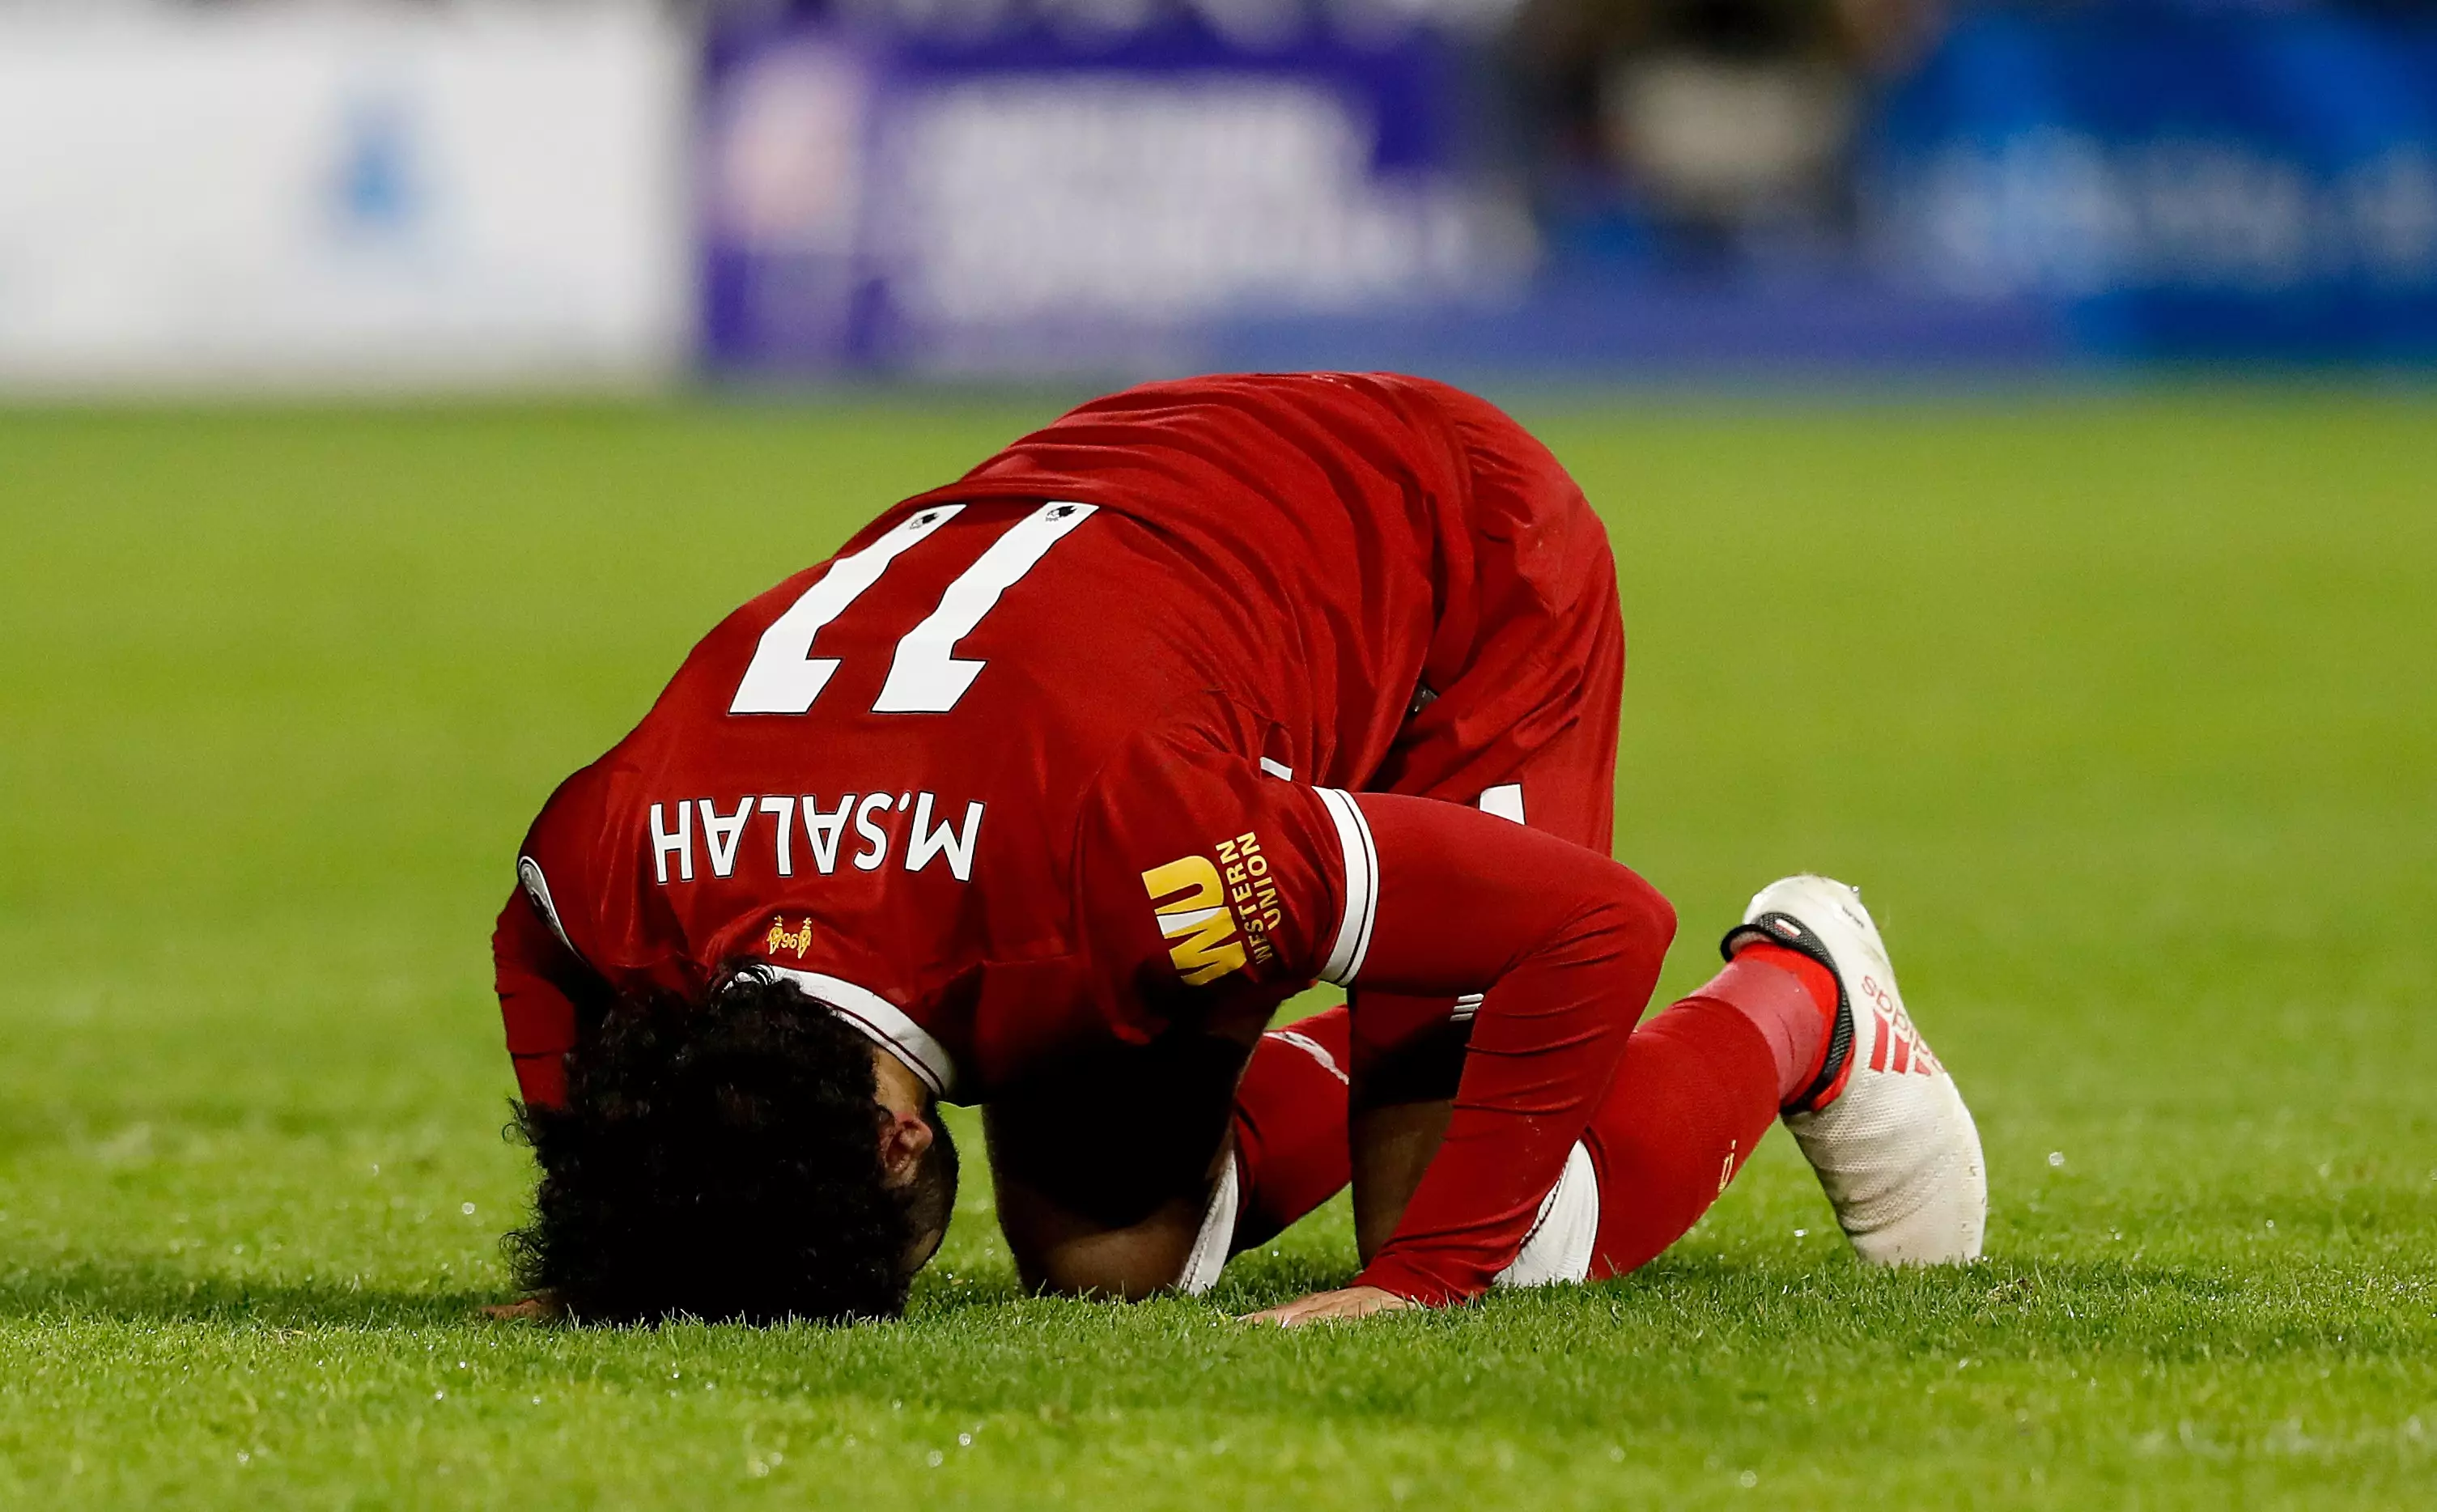 Salah celebrates scoring a goal for Liverpool. Image: PA